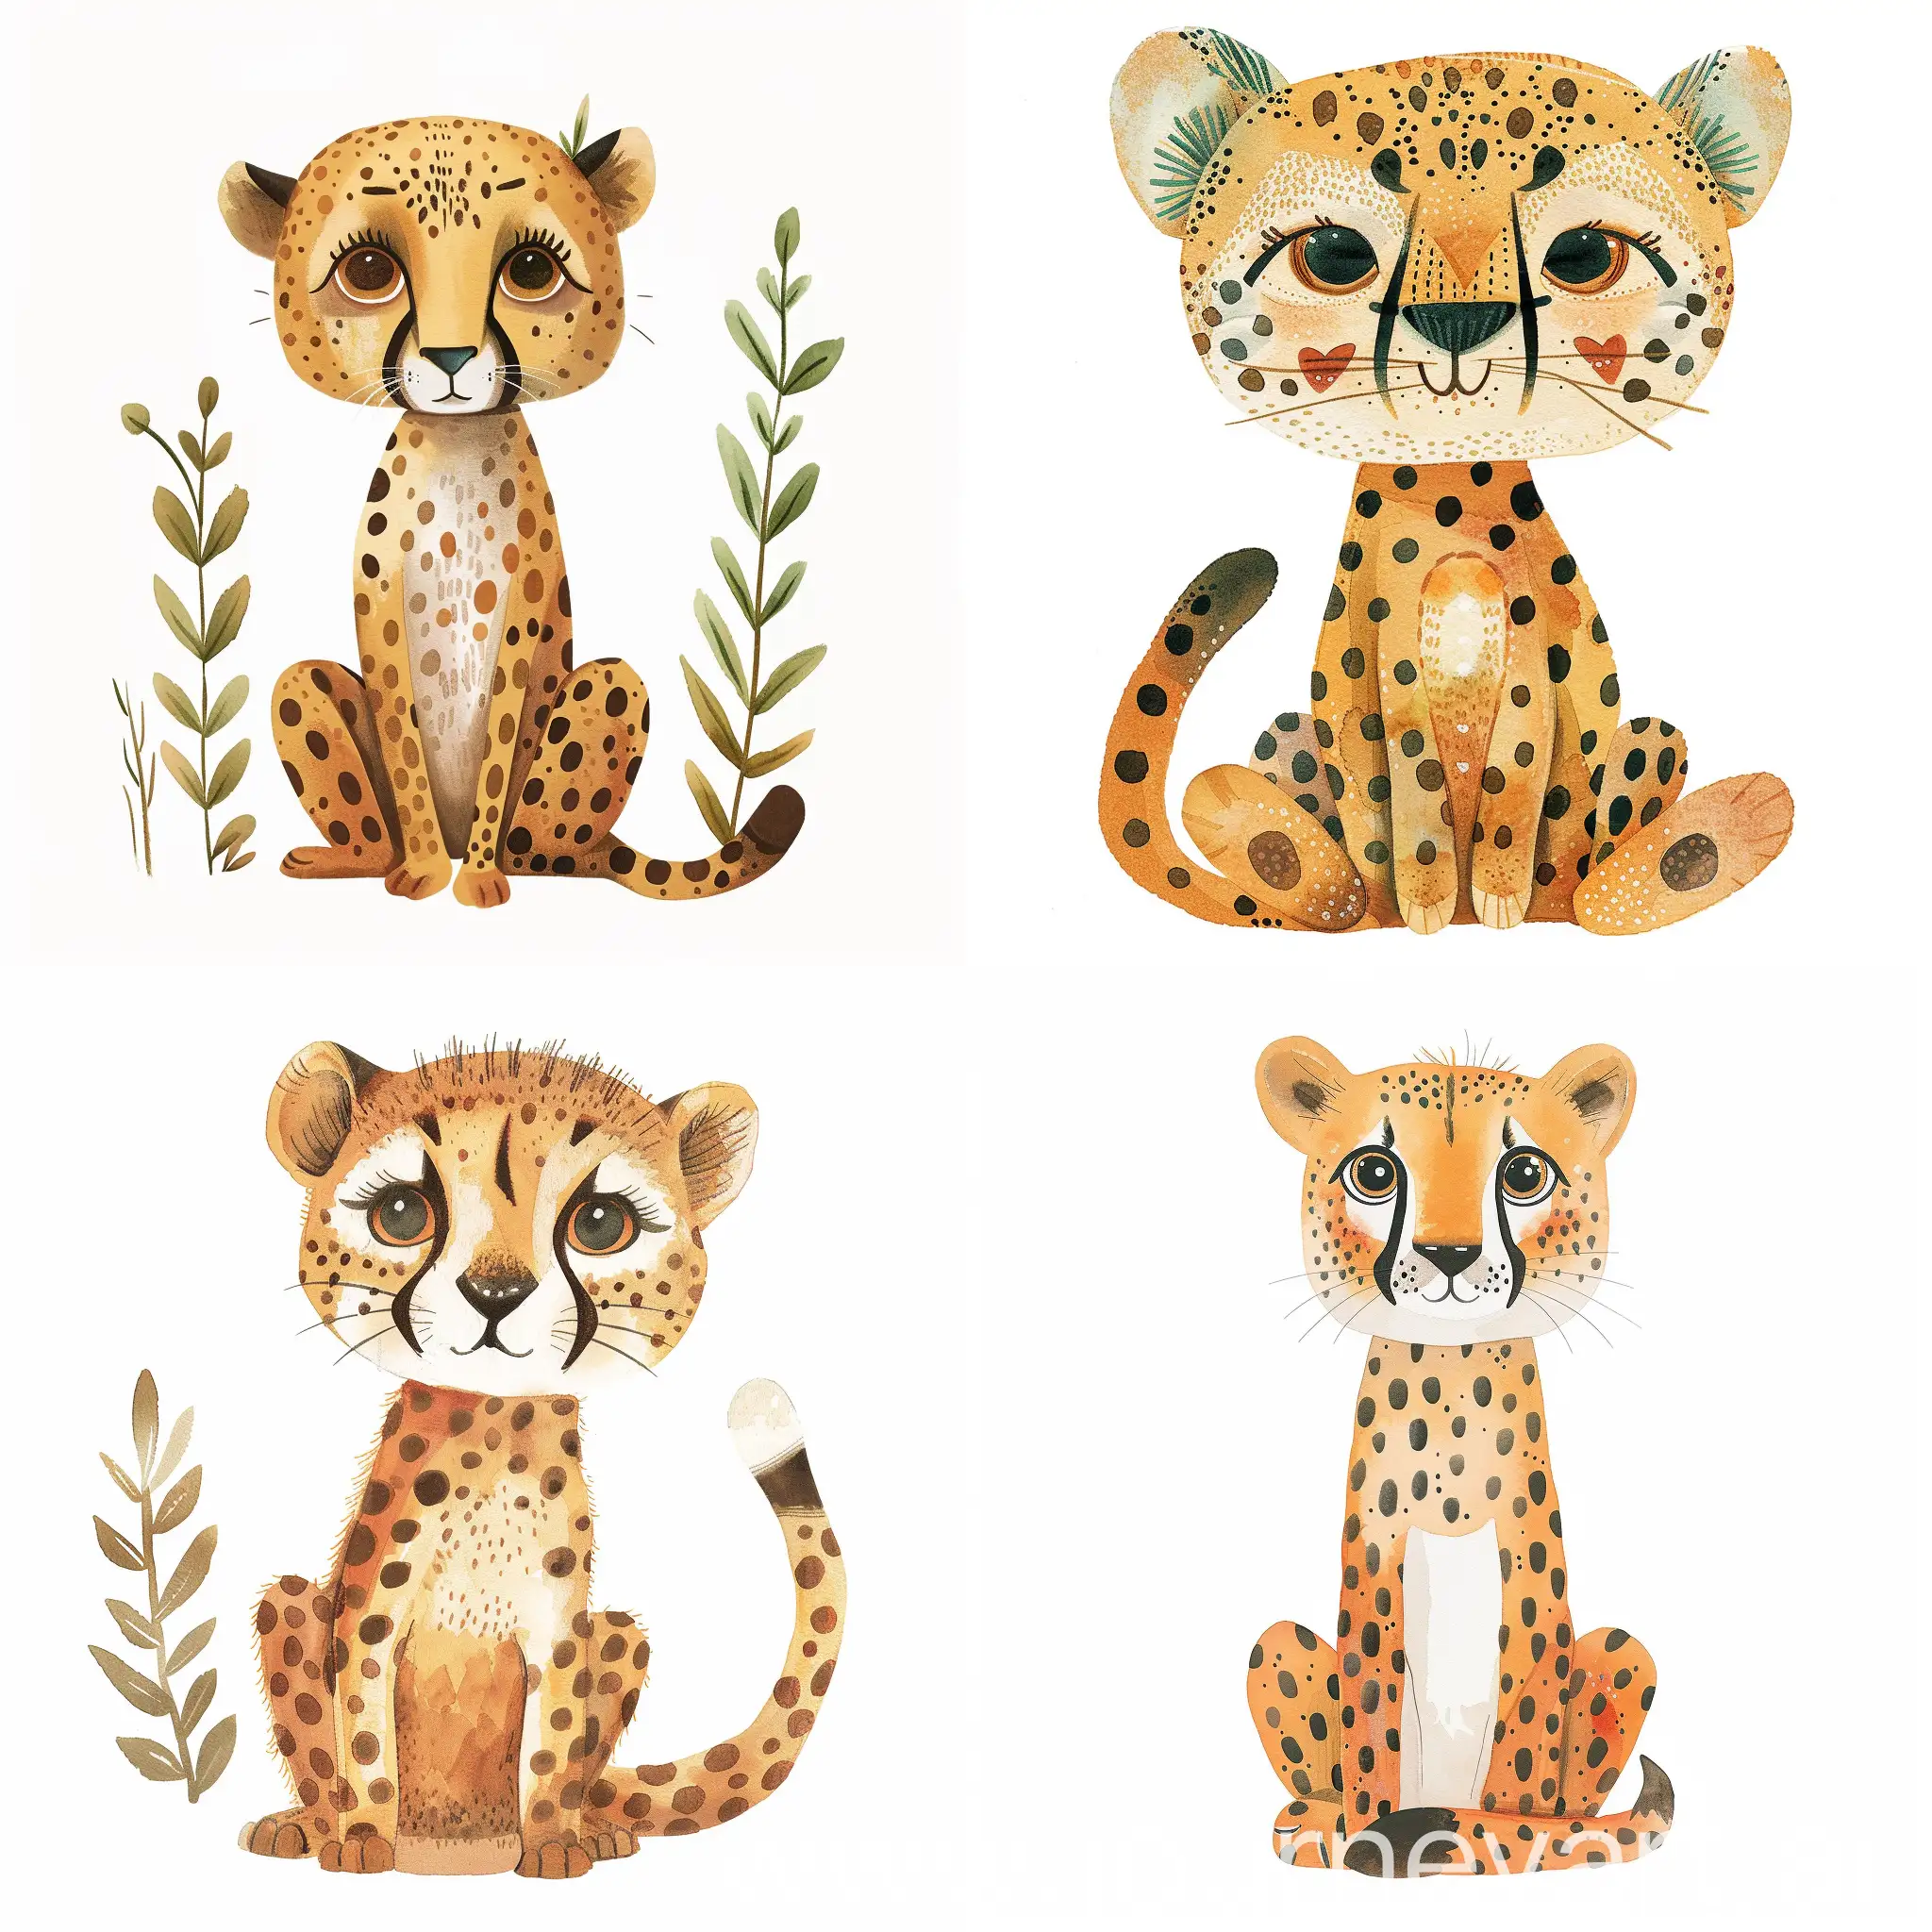 Kawaii-Cheetah-Nursery-Art-Delightful-Collaboration-of-Organic-Forms-in-Desaturated-Pastel-Tones